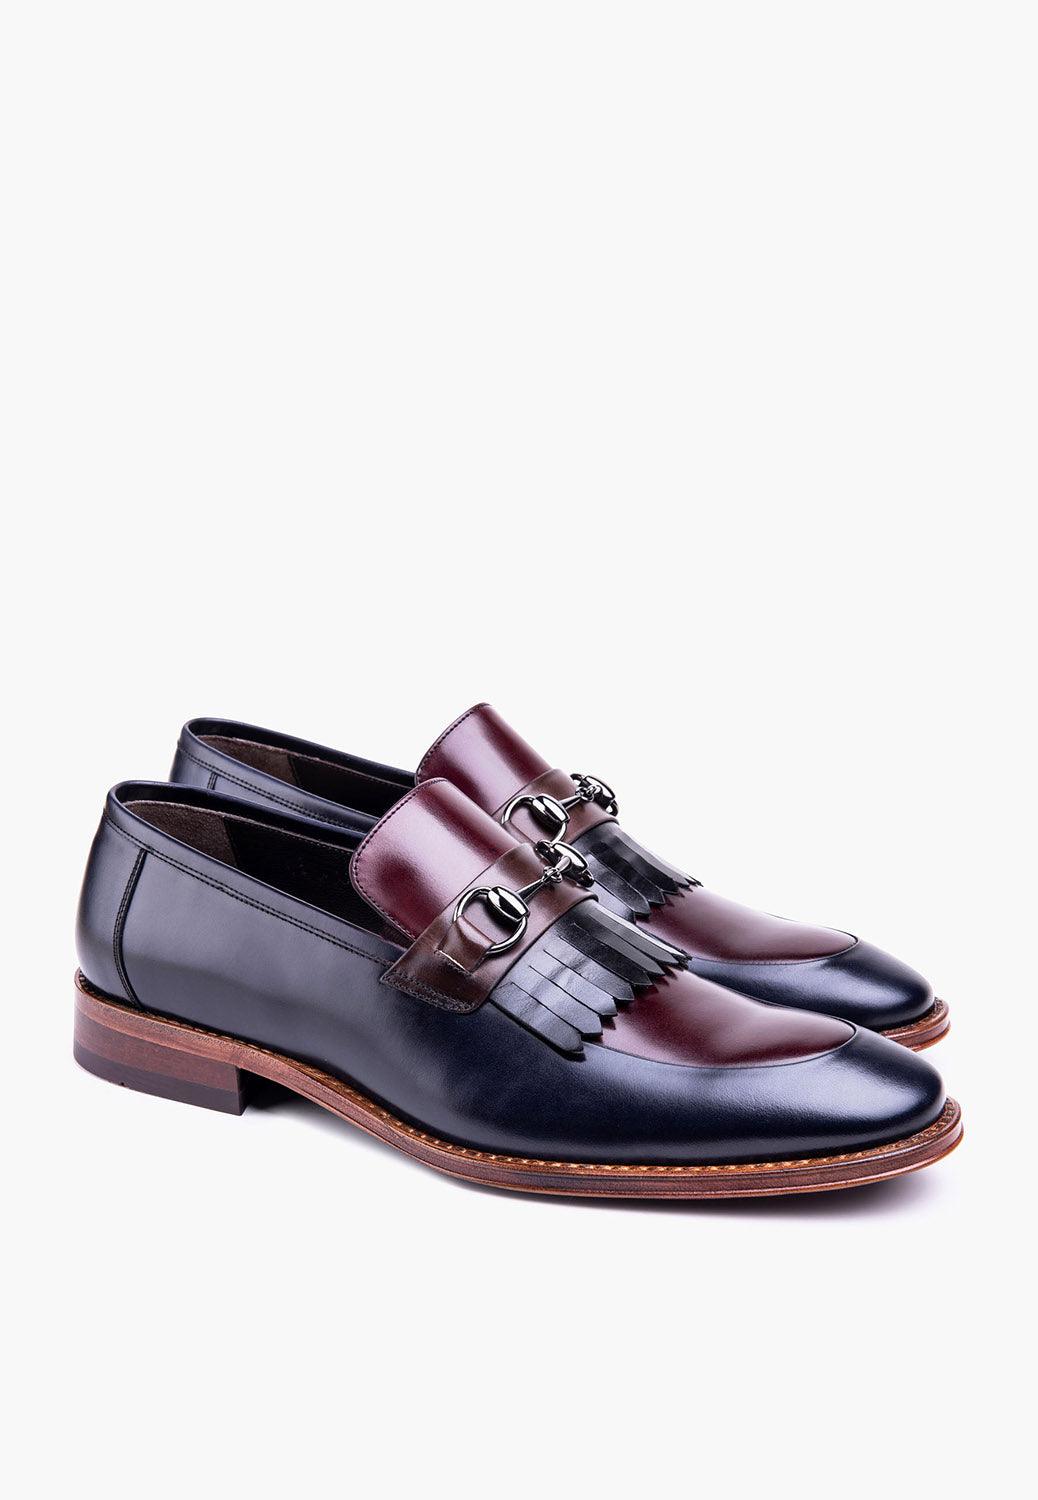 Monaco Loafer Navy-Burgundy - SEPOL Shoes